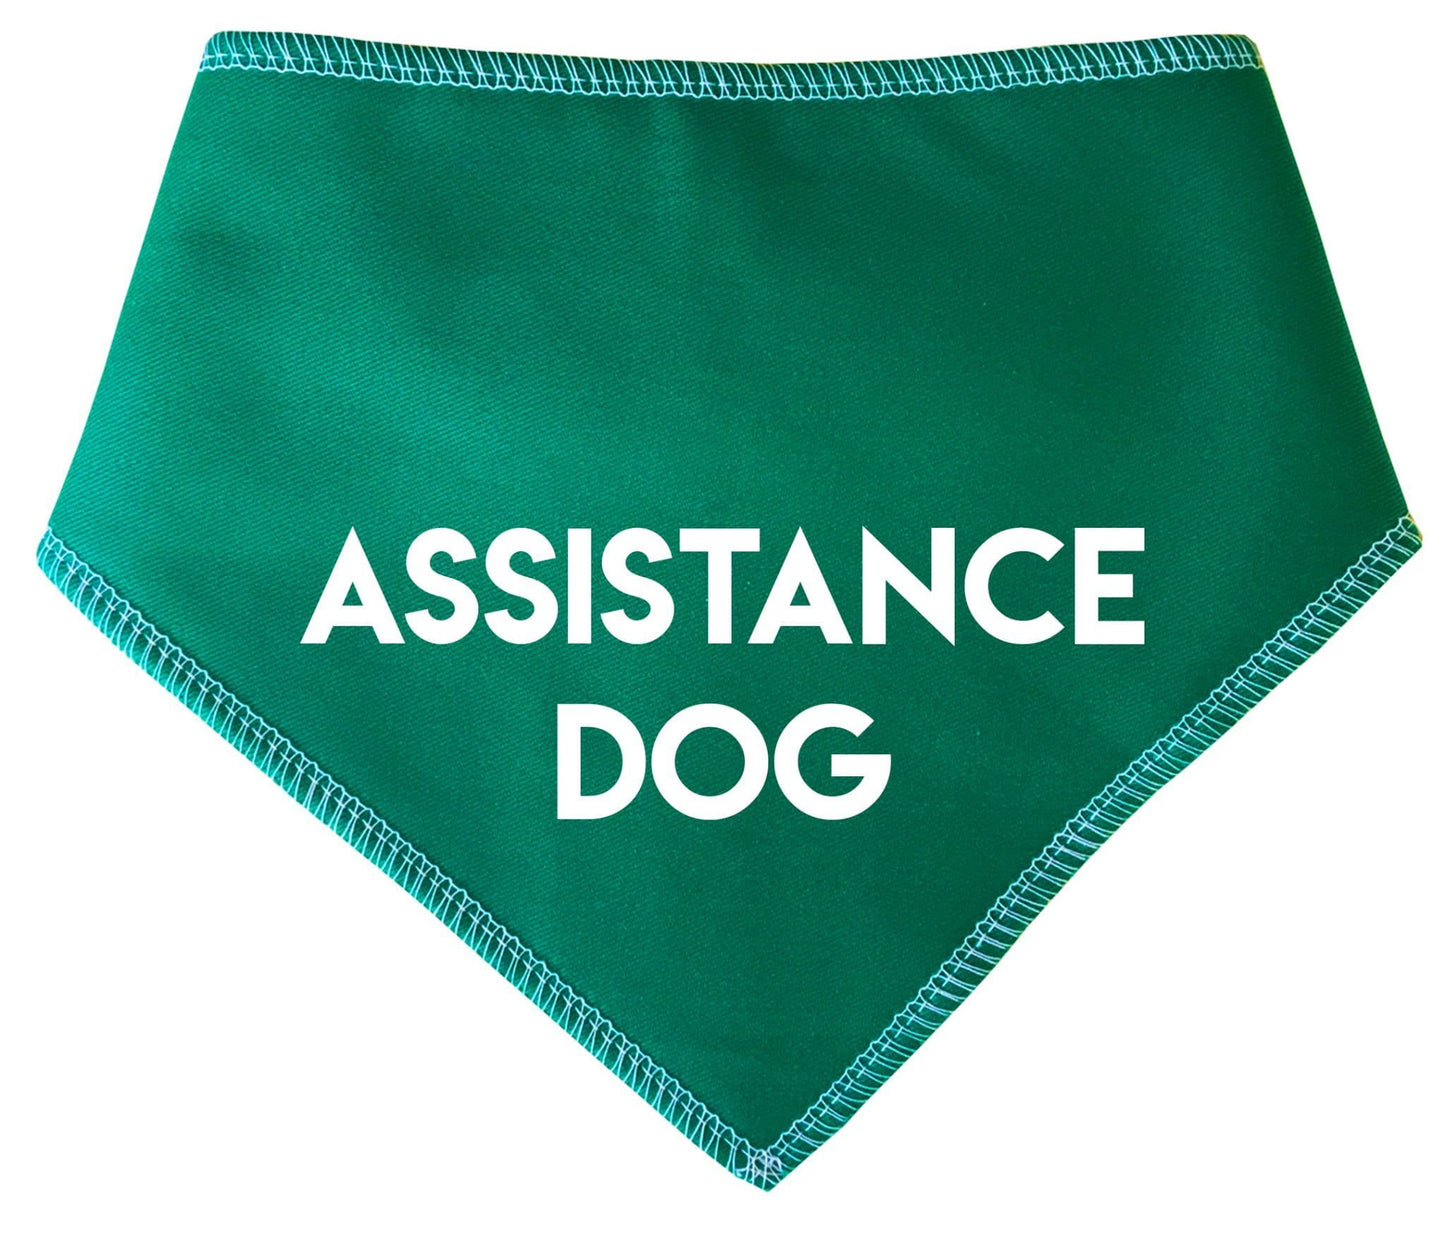 'Assistance Dog' Alert Dog Bandana